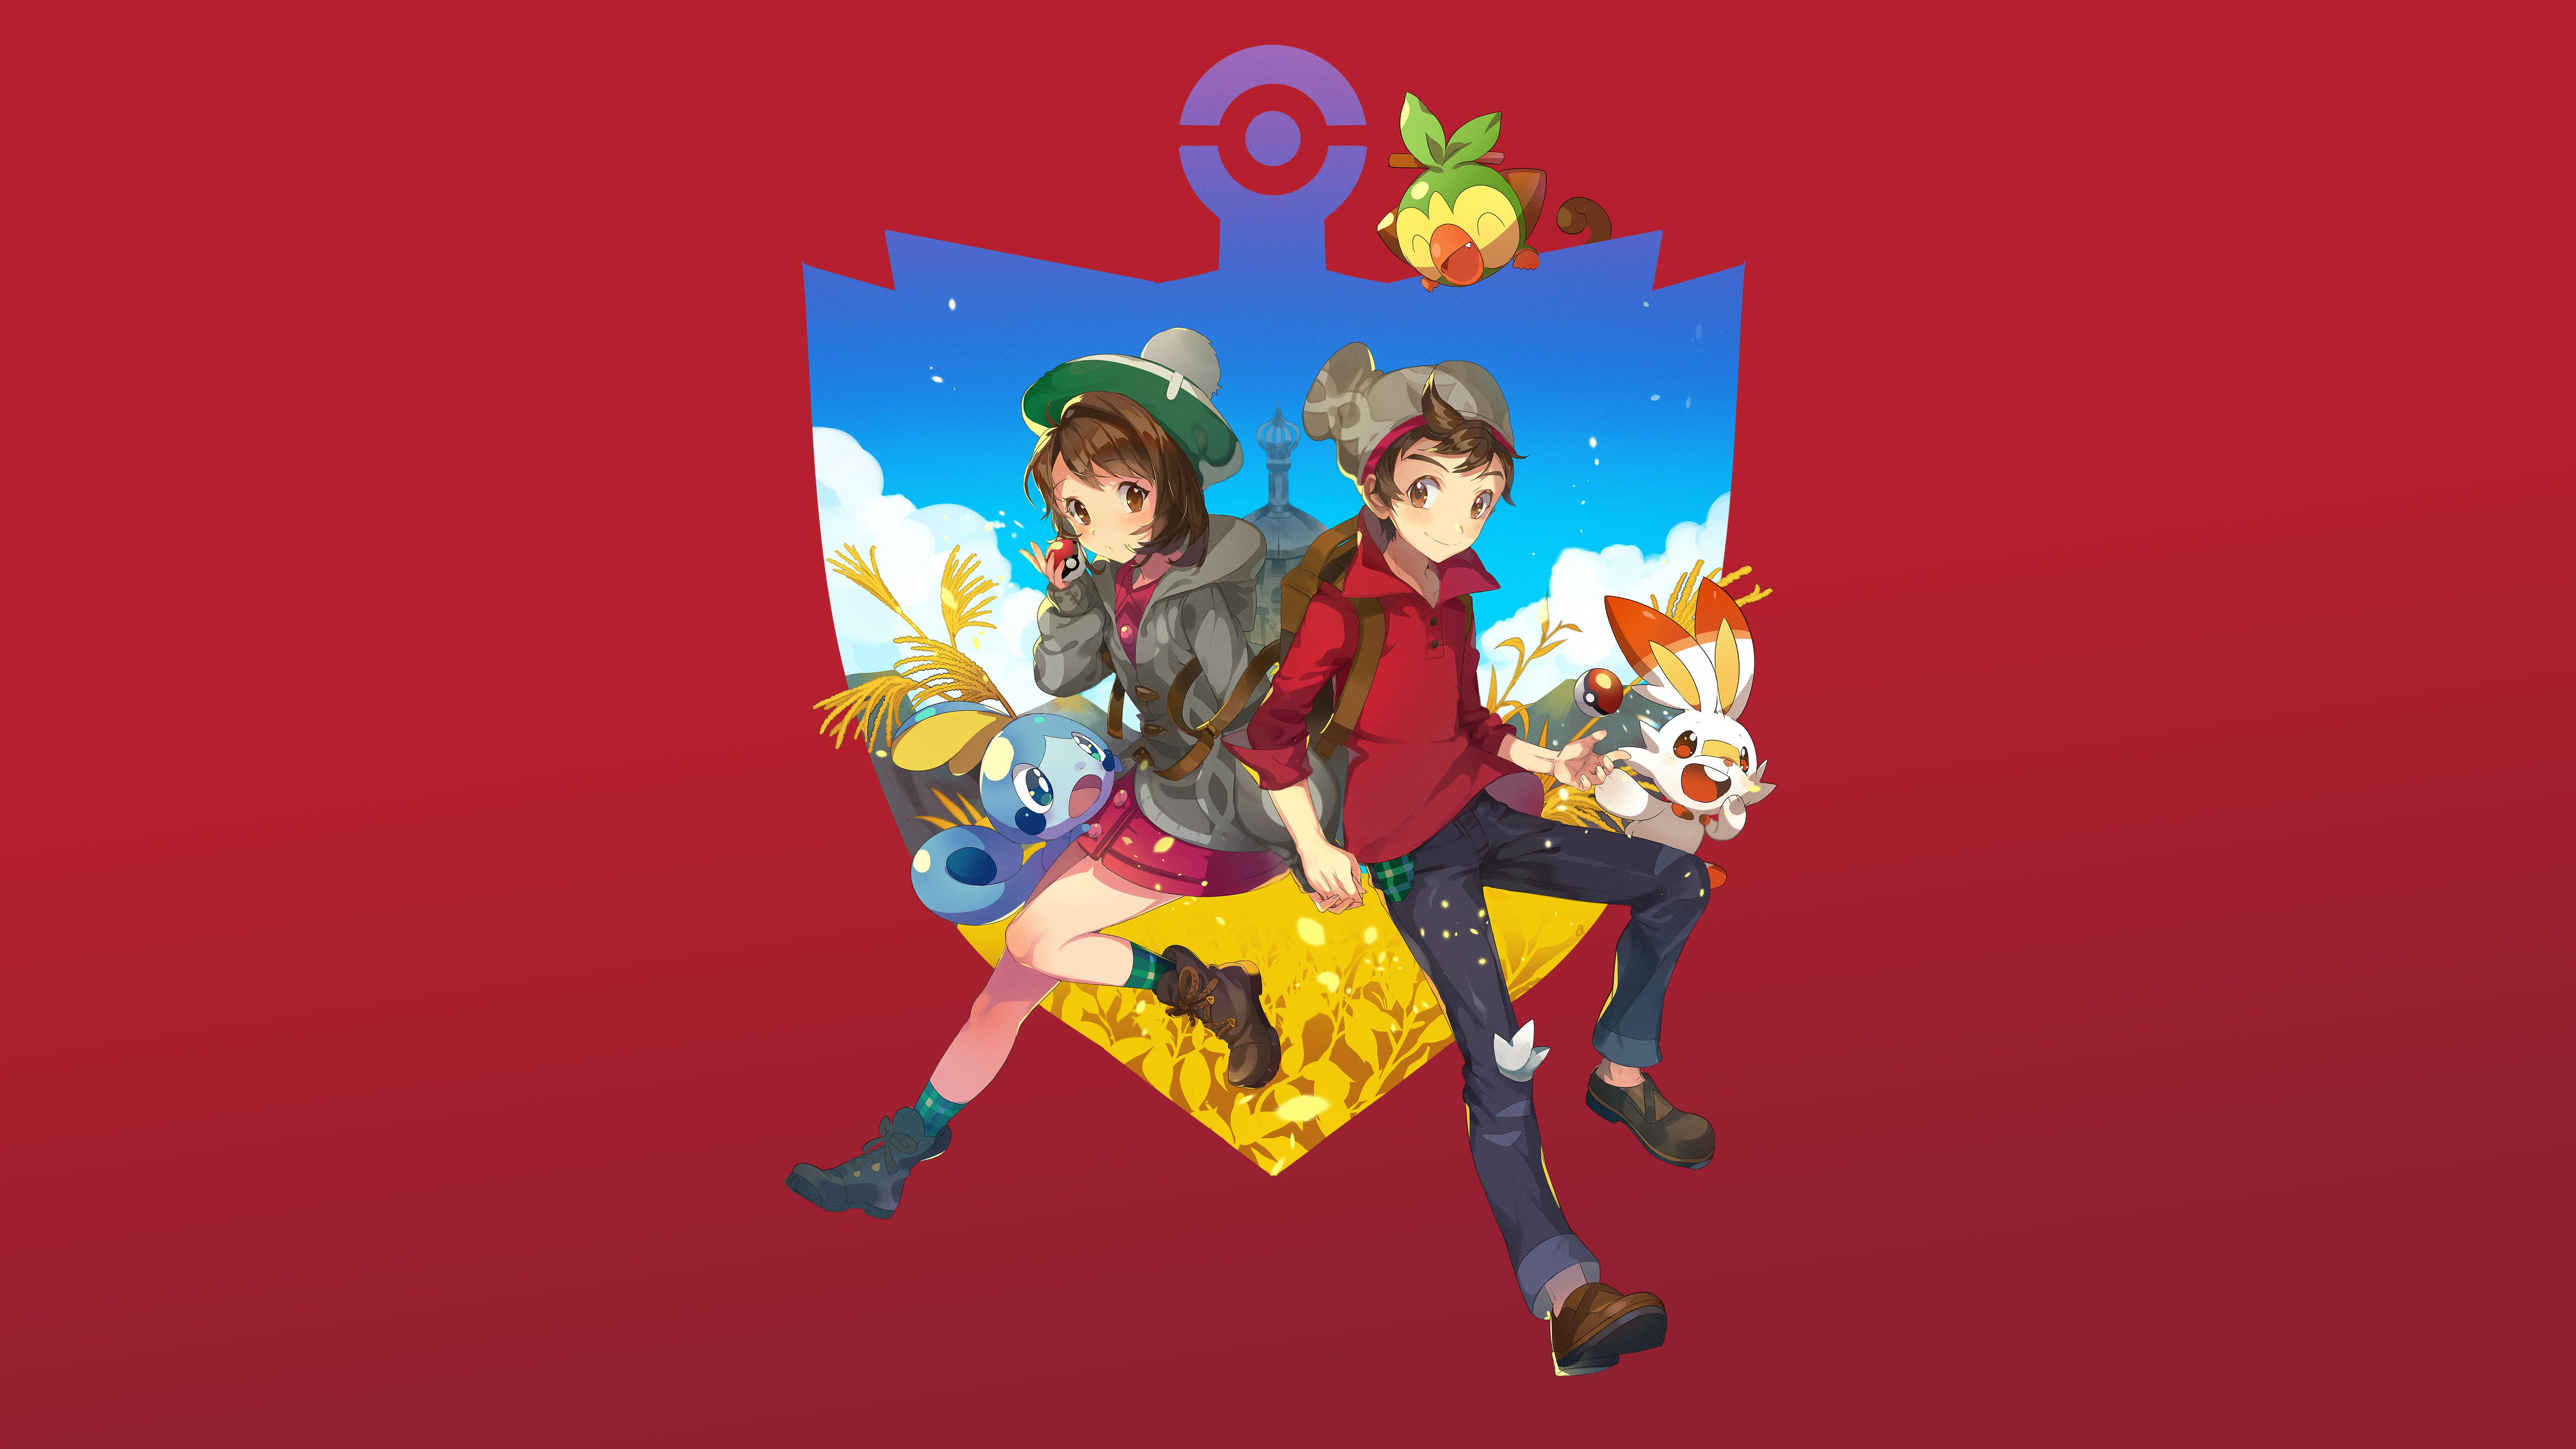 Pokémon Sword & Shield Characters